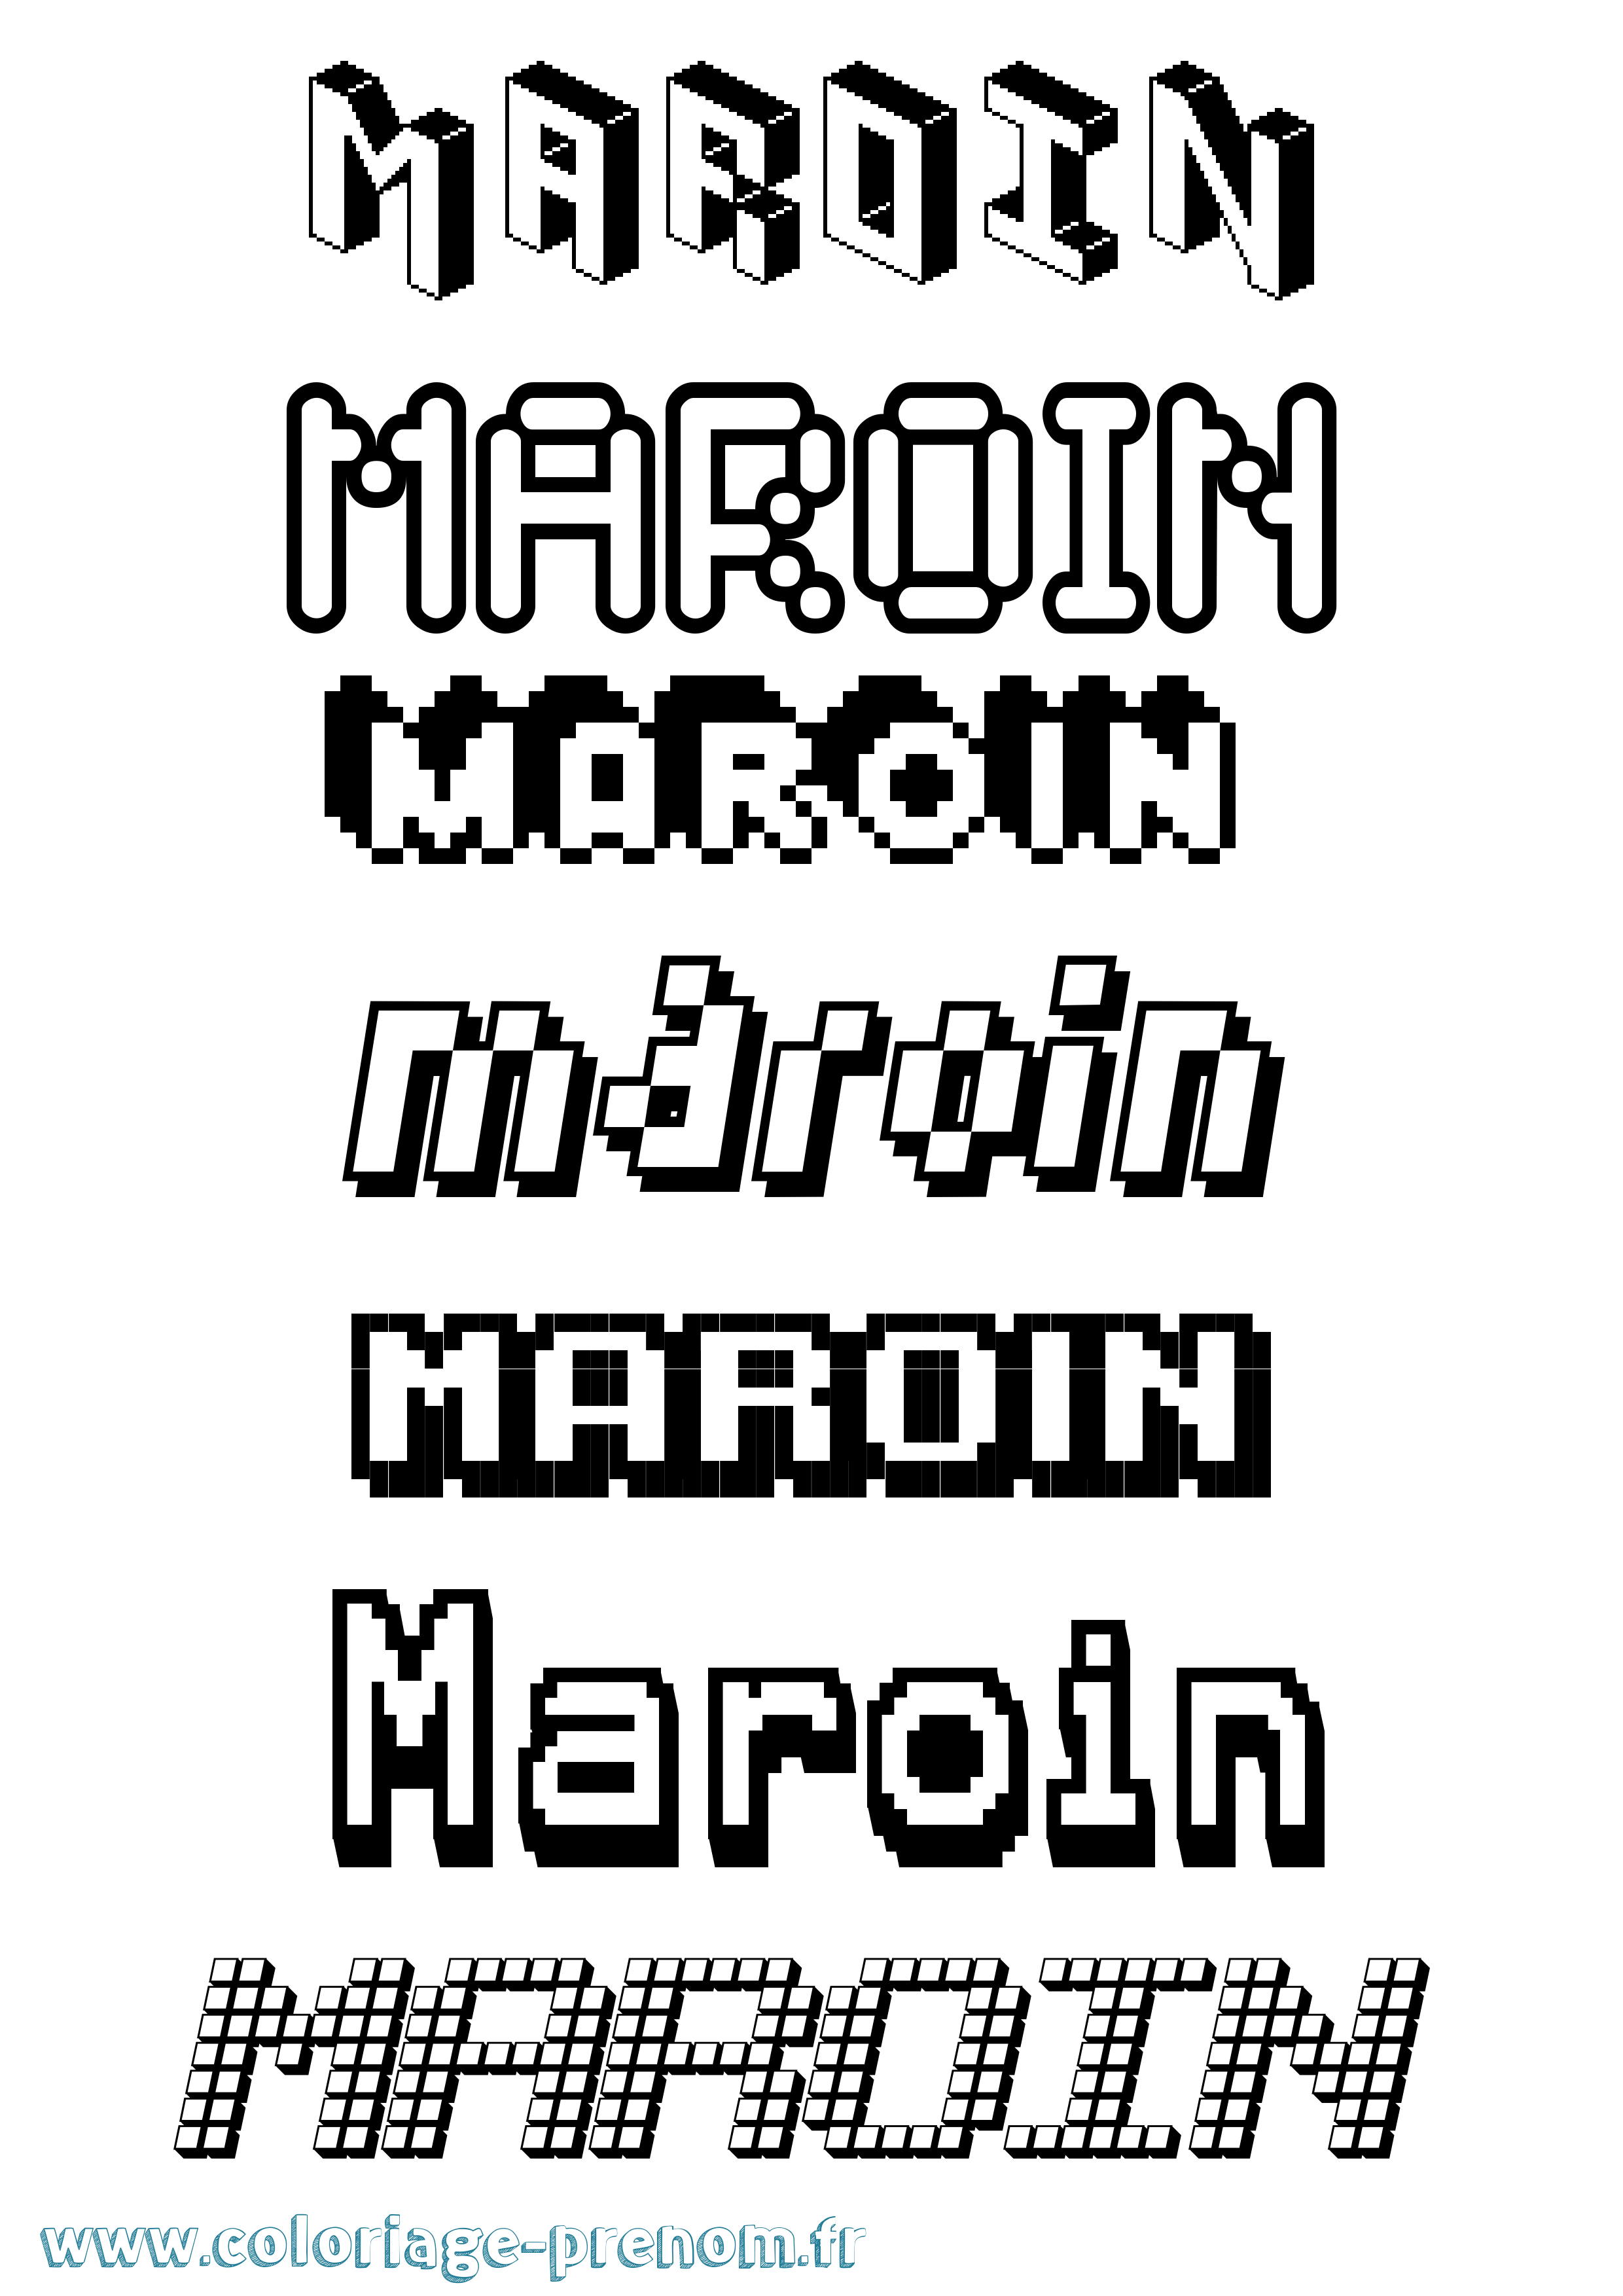 Coloriage prénom Maroin Pixel